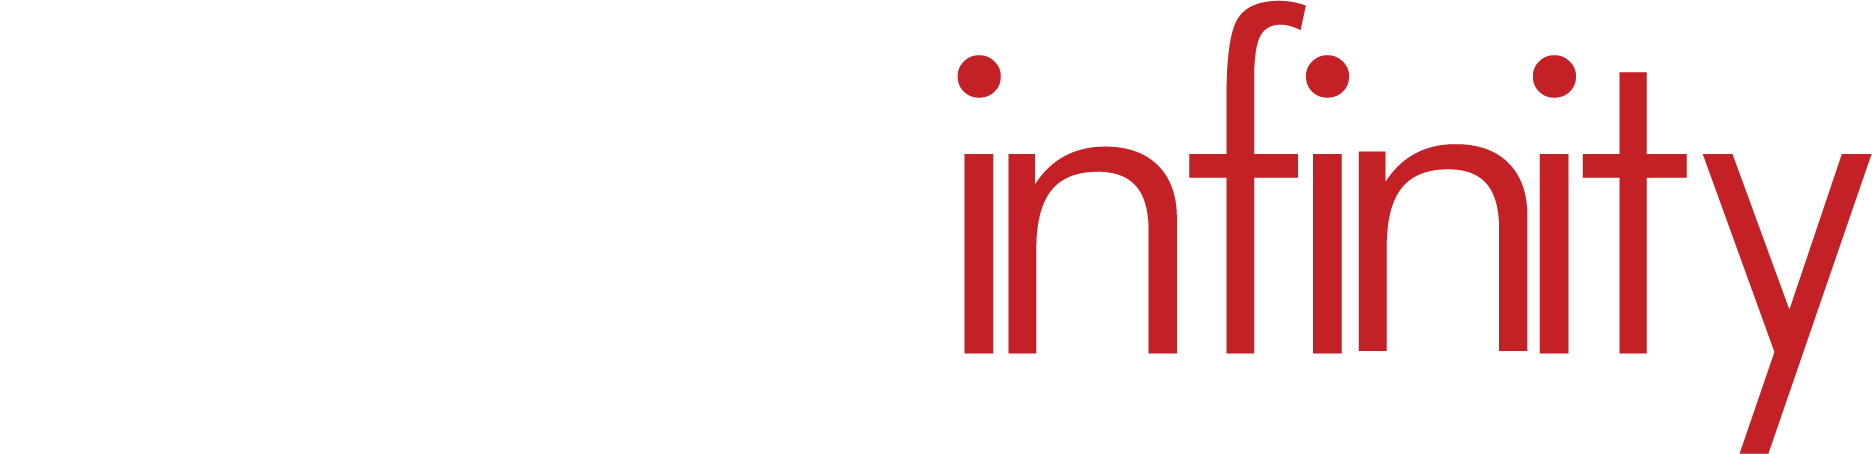 Espial Infinity Logo